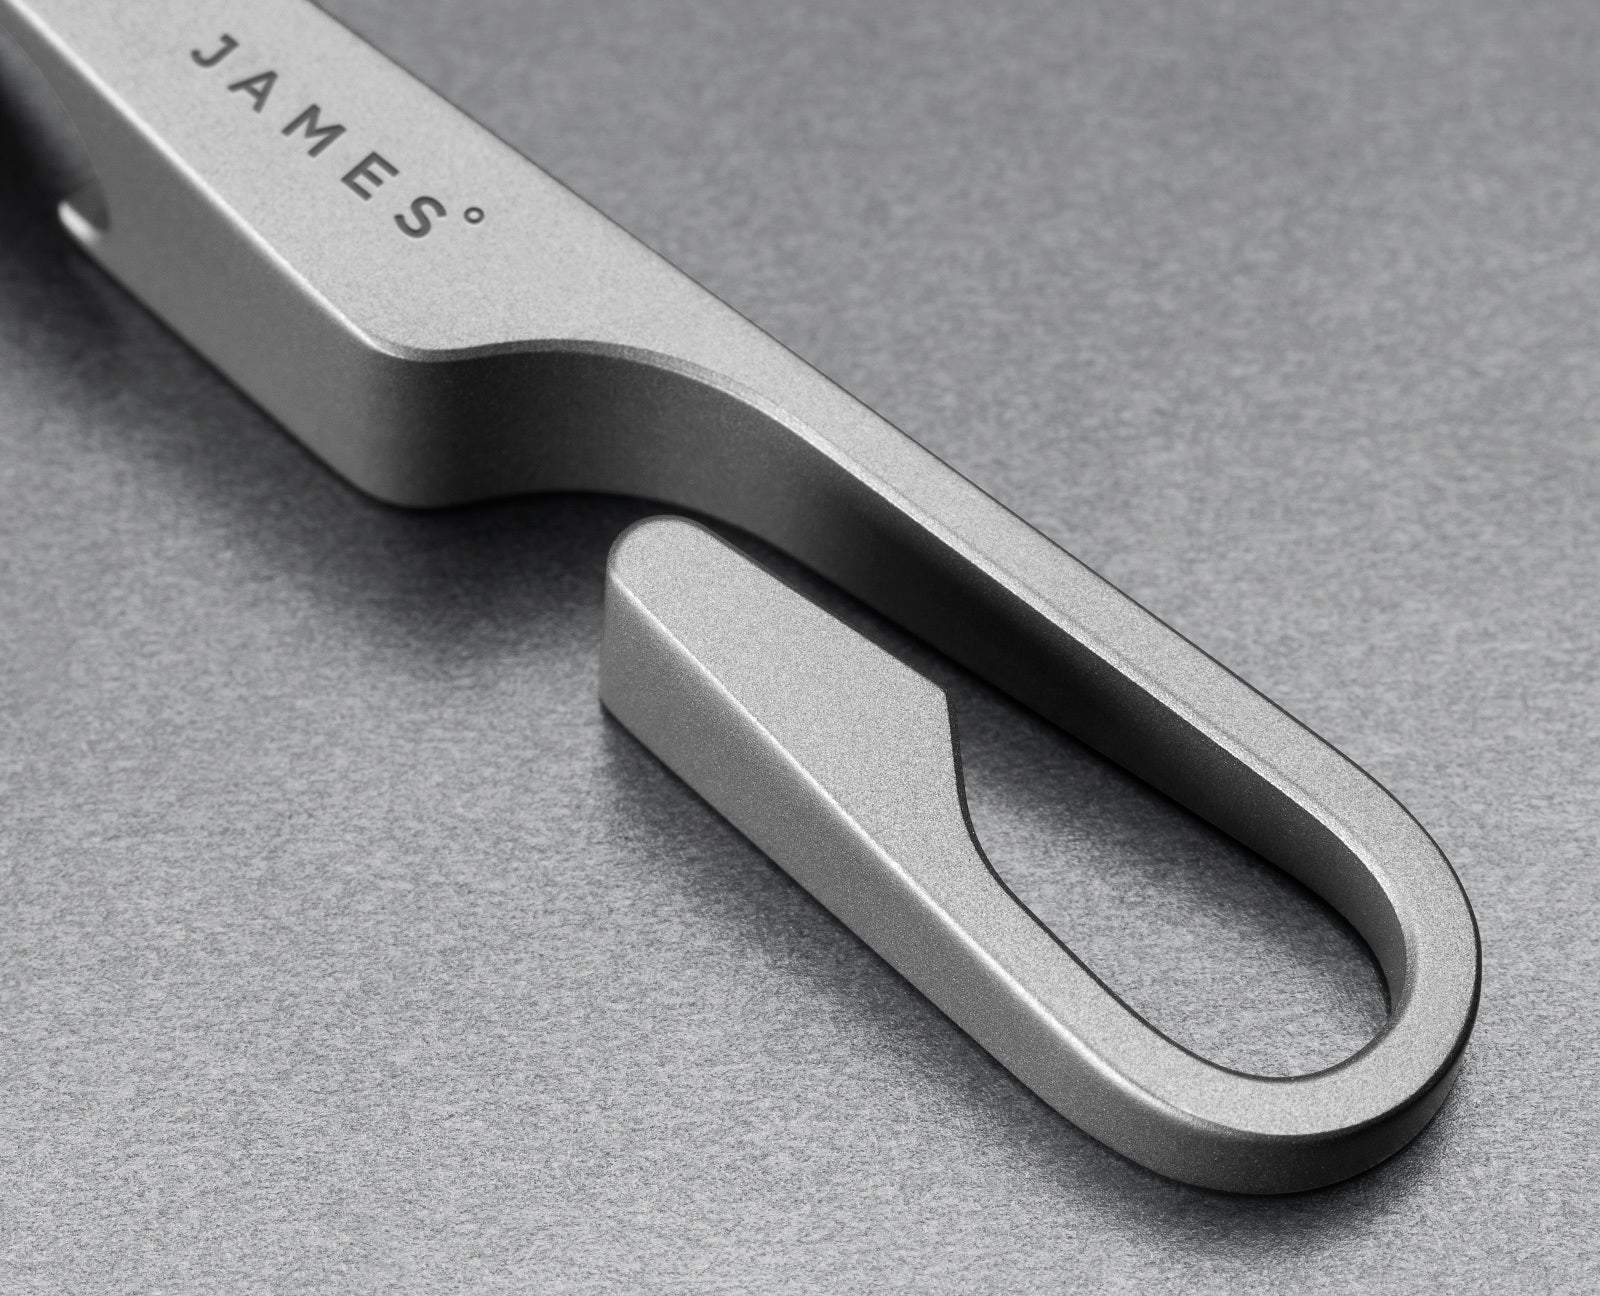 The James Brand Titanium Key Rings